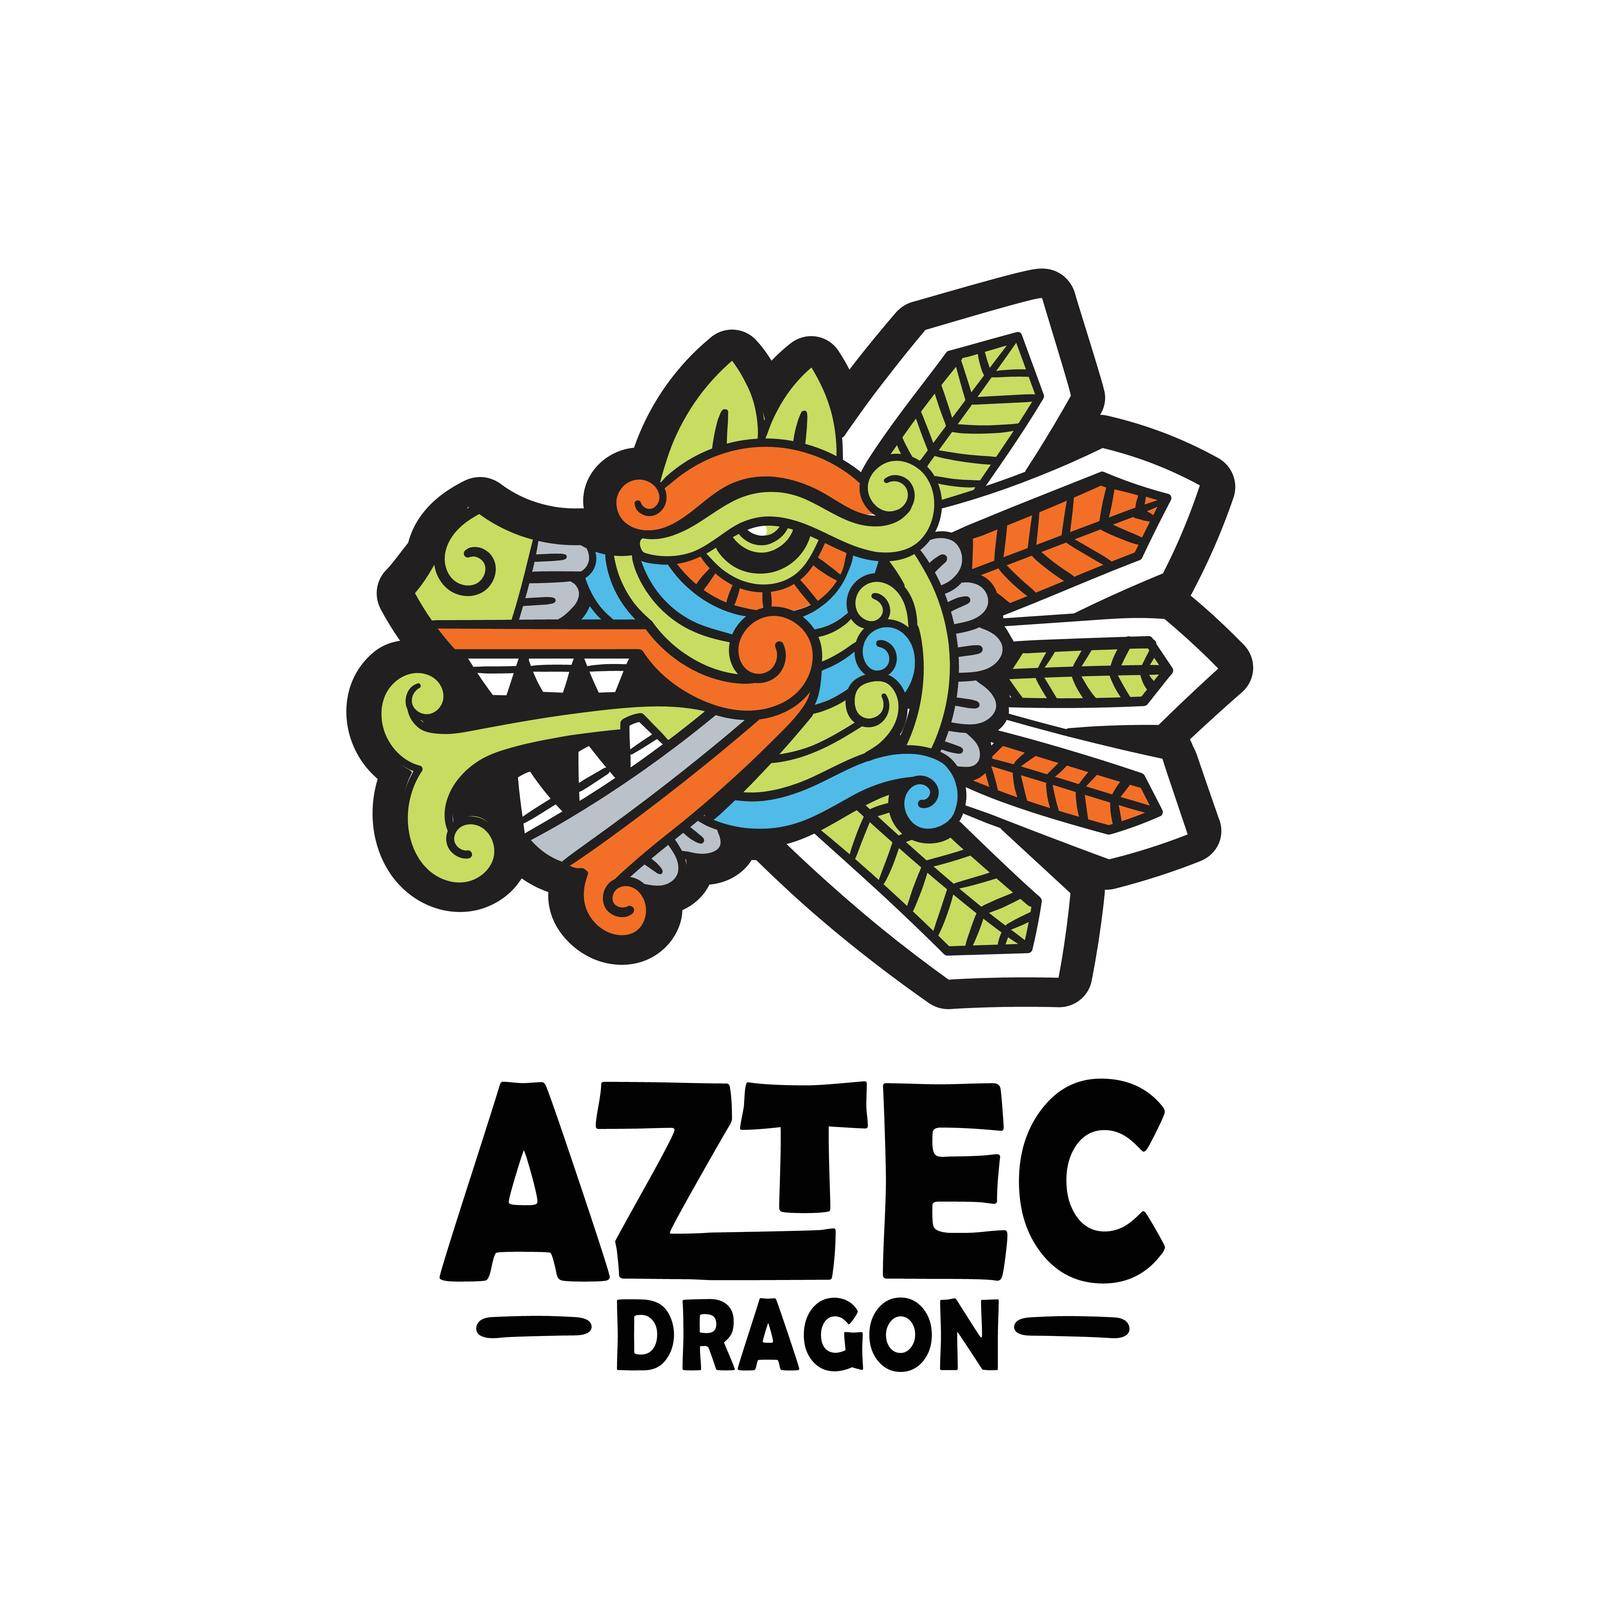 quetzalcoatl head mexican god aztec graphic, Native American animal design of Aztec Indians from Mexican codex